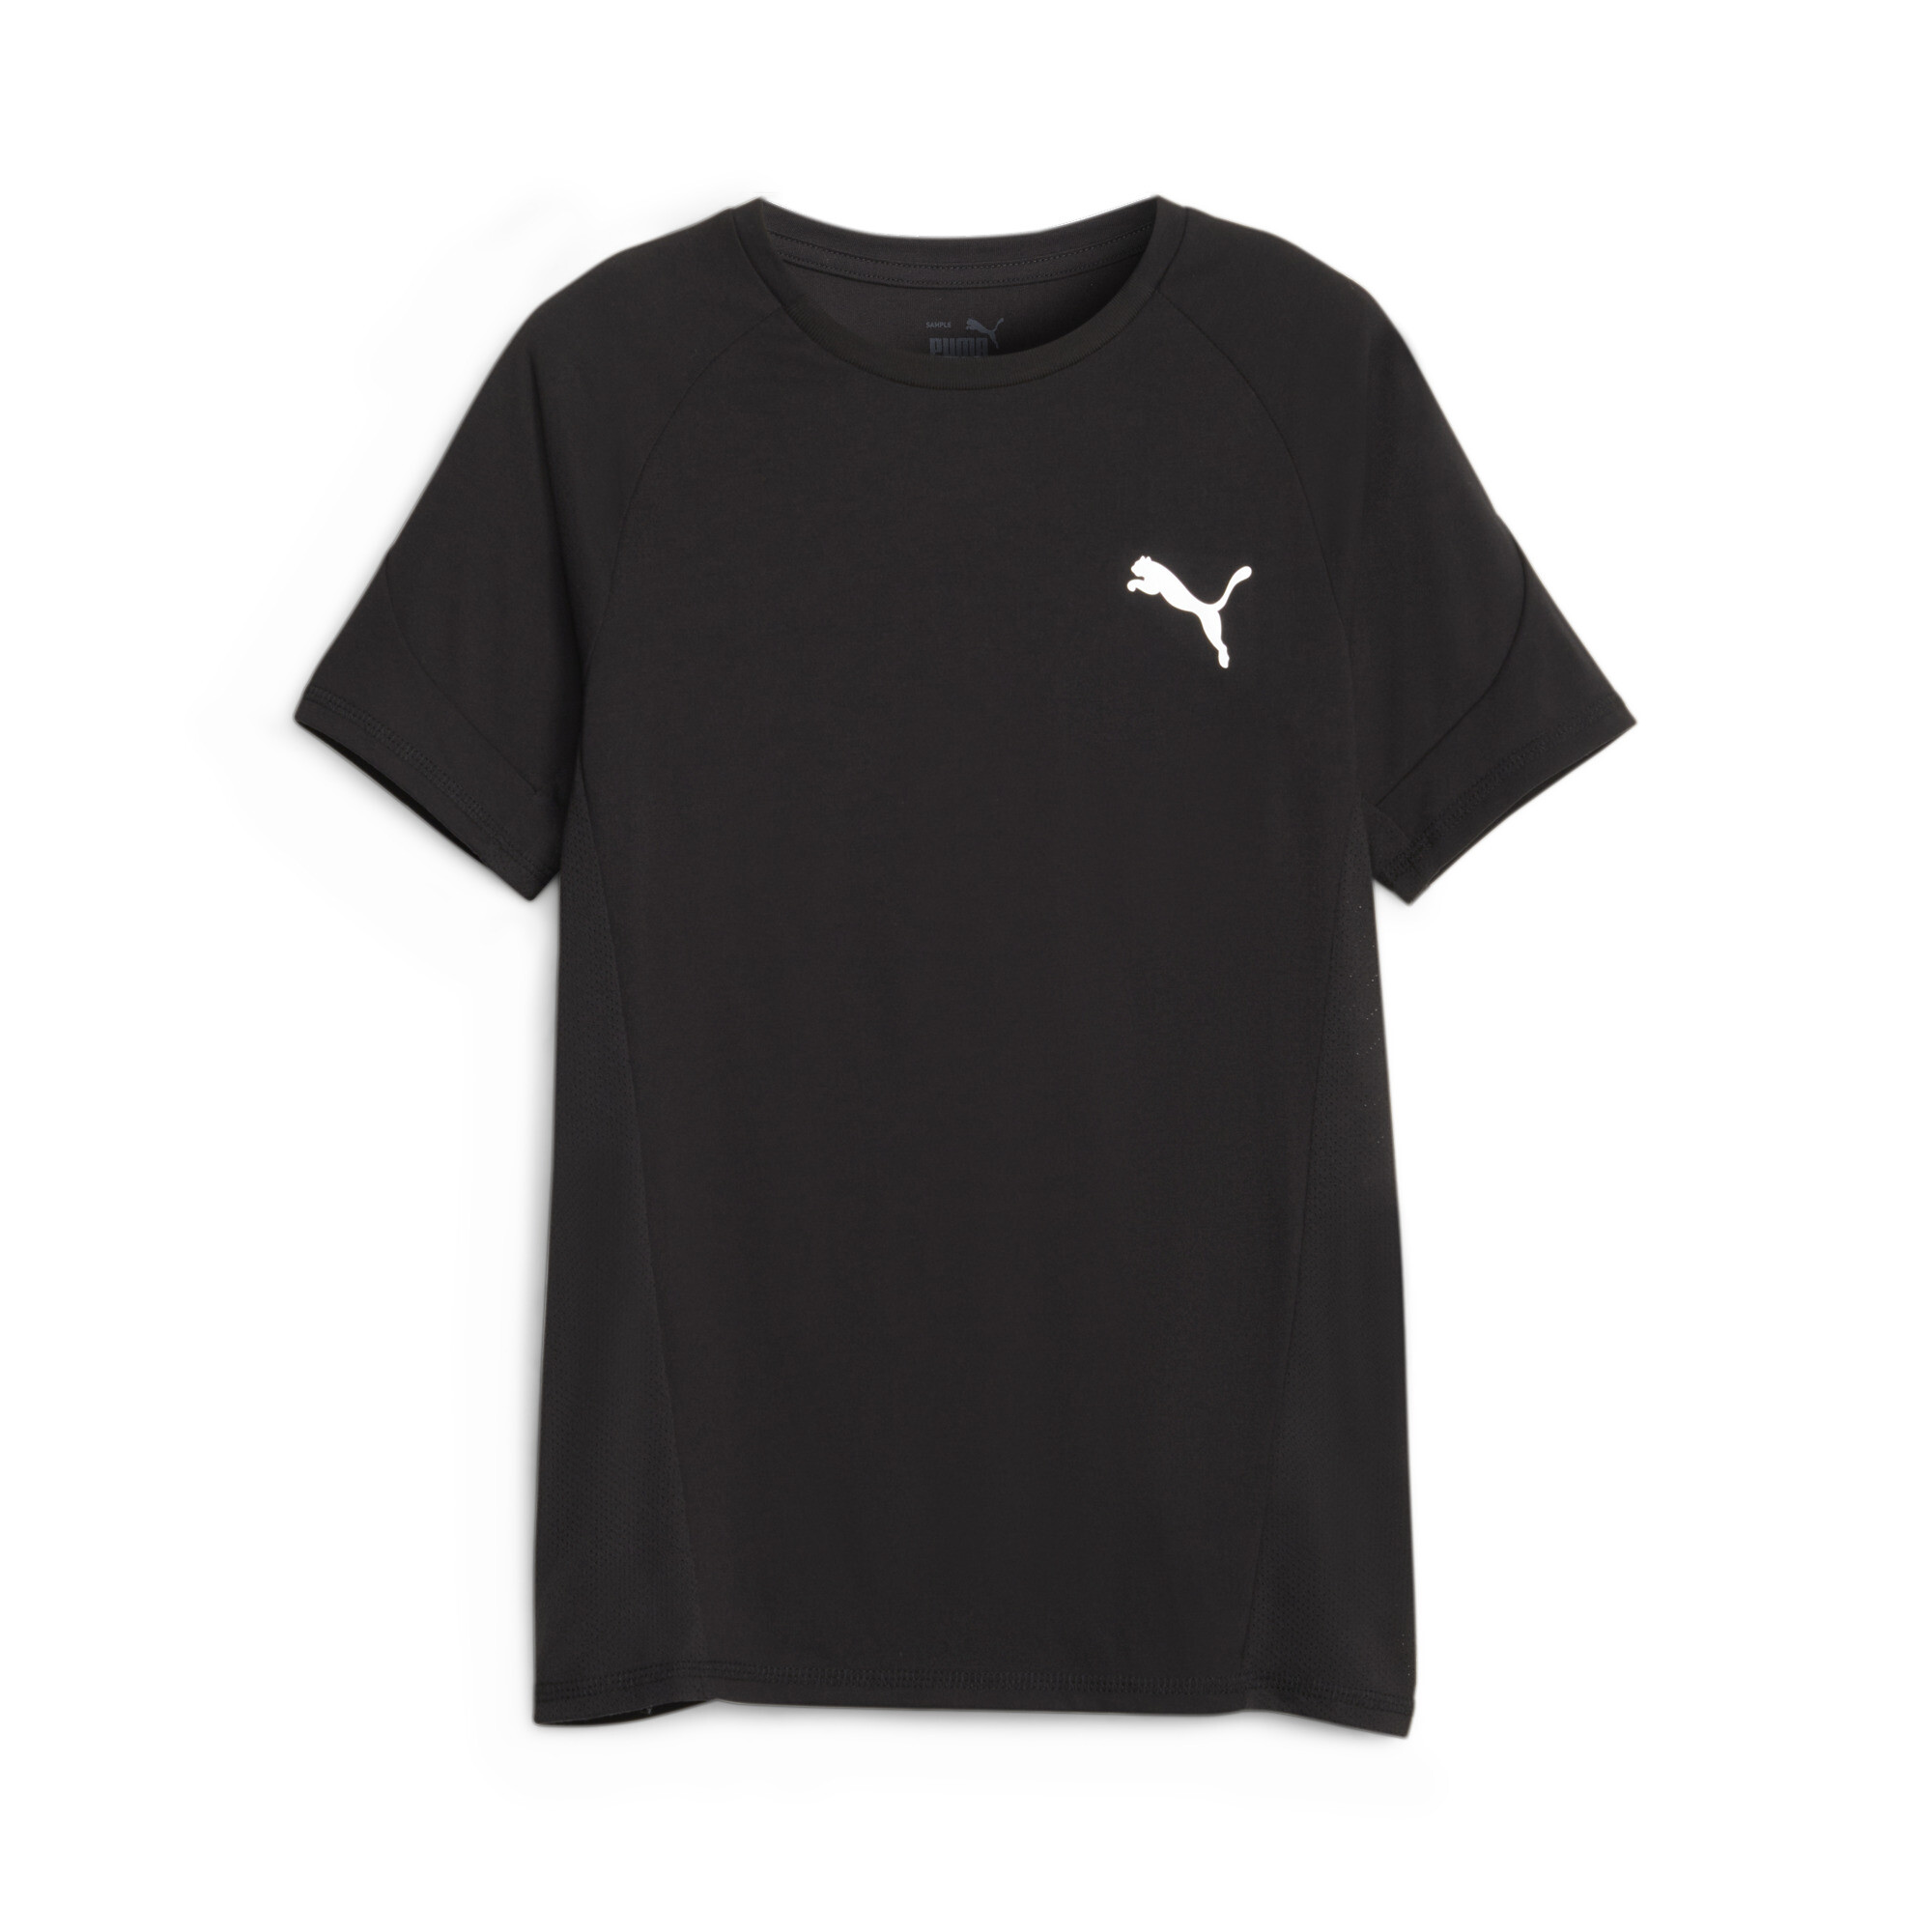 PUMA Evostripe T-Shirt In Black, Size 9-10 Youth